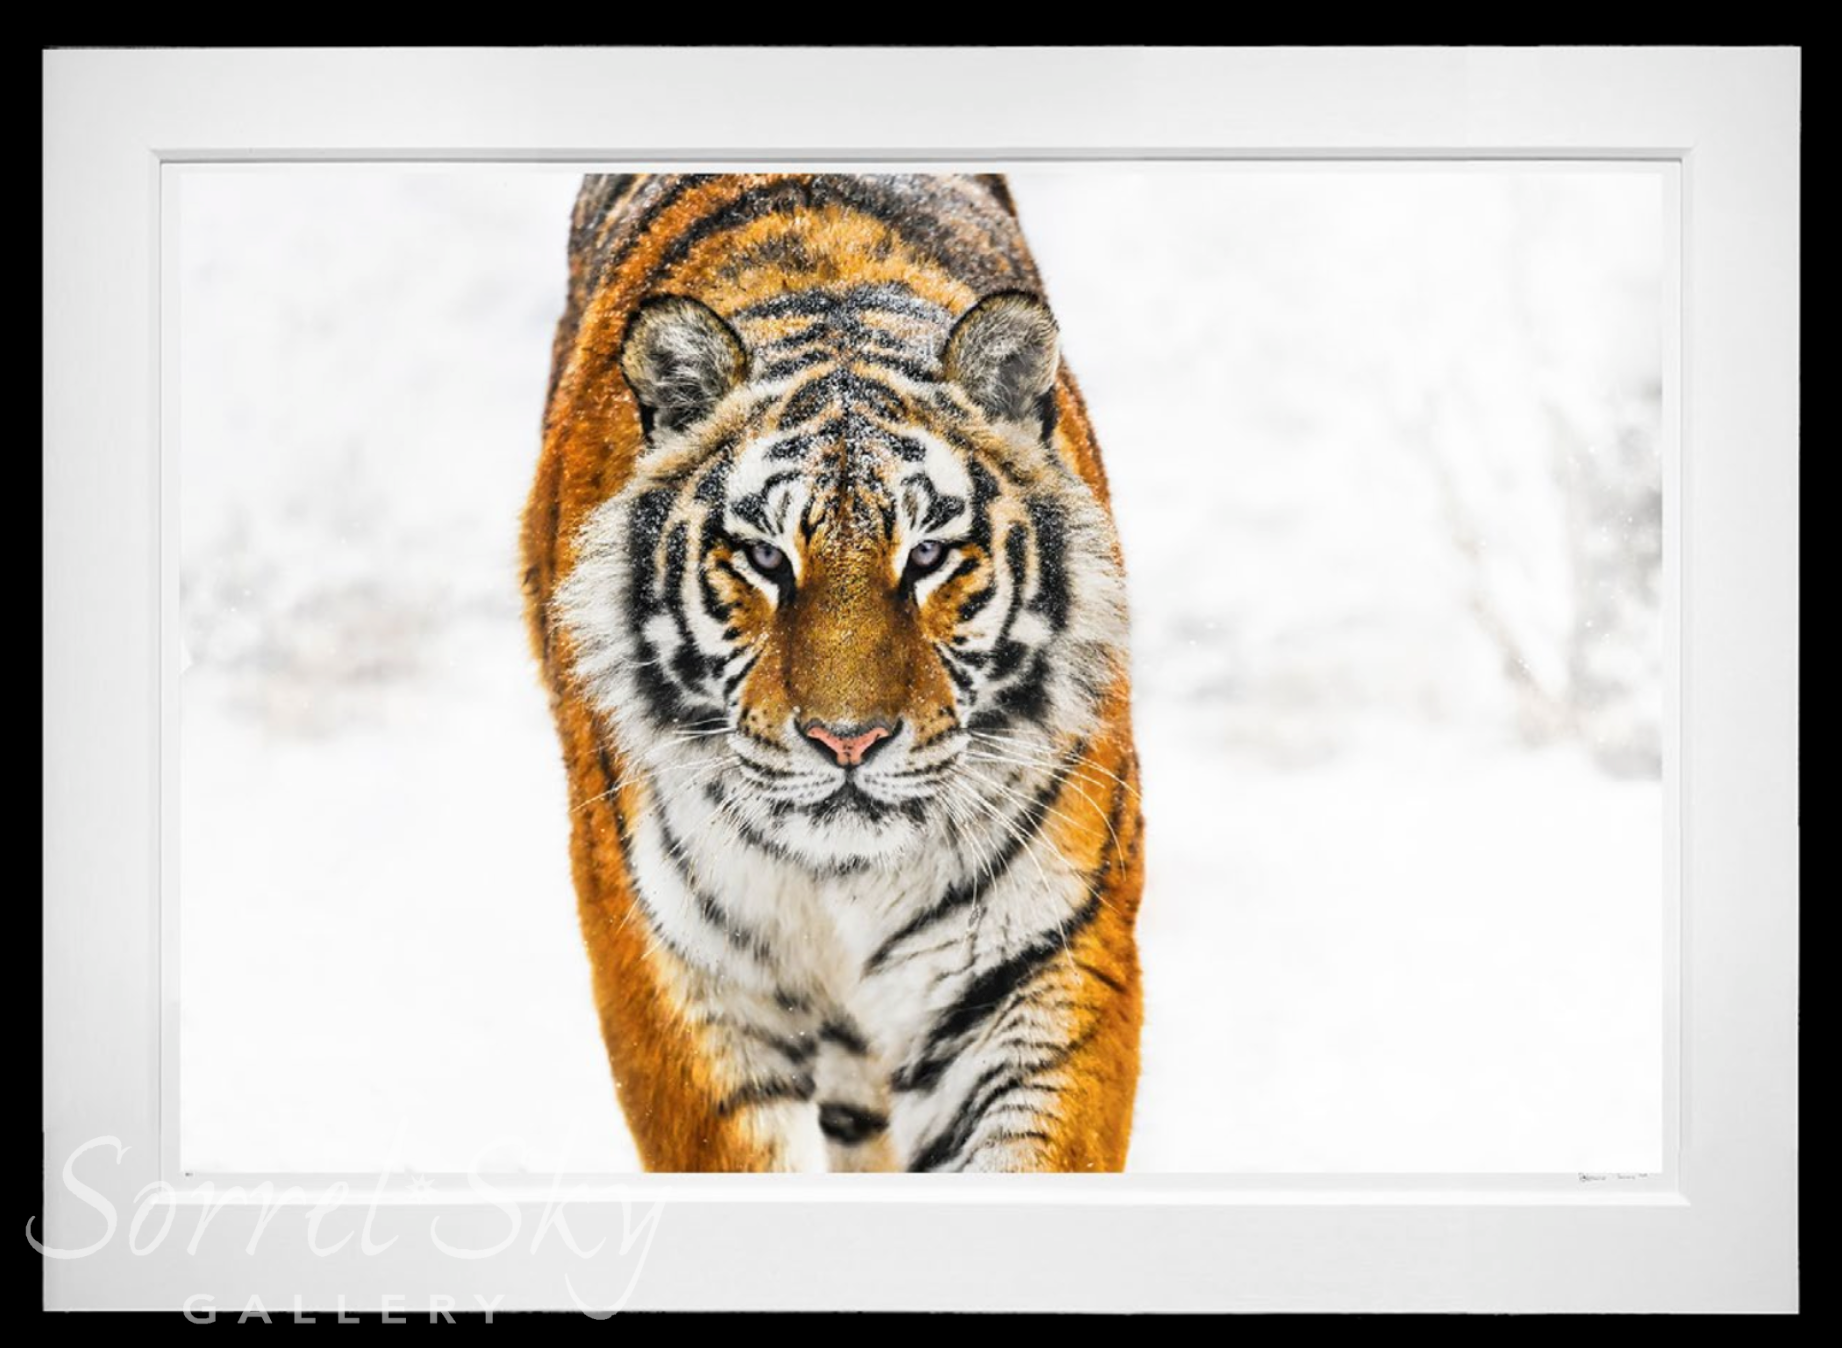 Snowcat-Photographic Print-David Yarrow-Sorrel Sky Gallery